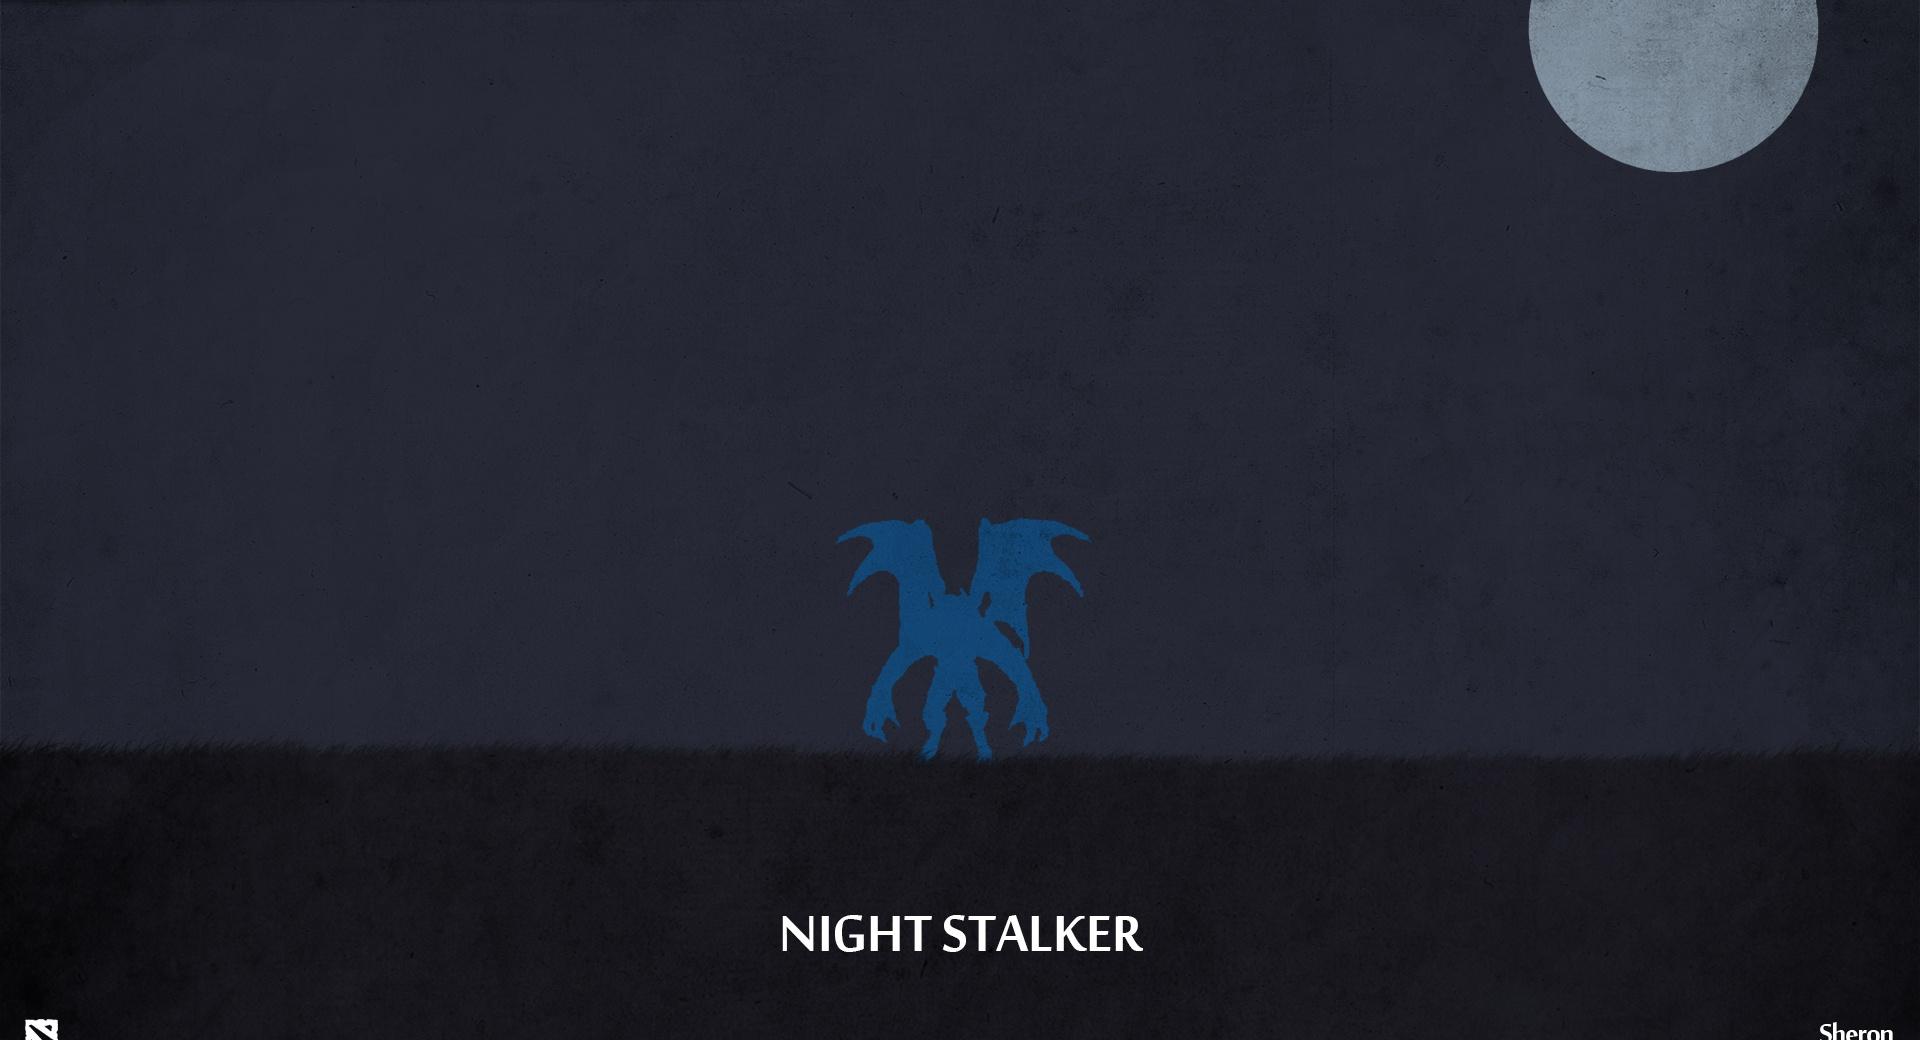 Night Stalker - DotA 2 at 1024 x 1024 iPad size wallpapers HD quality